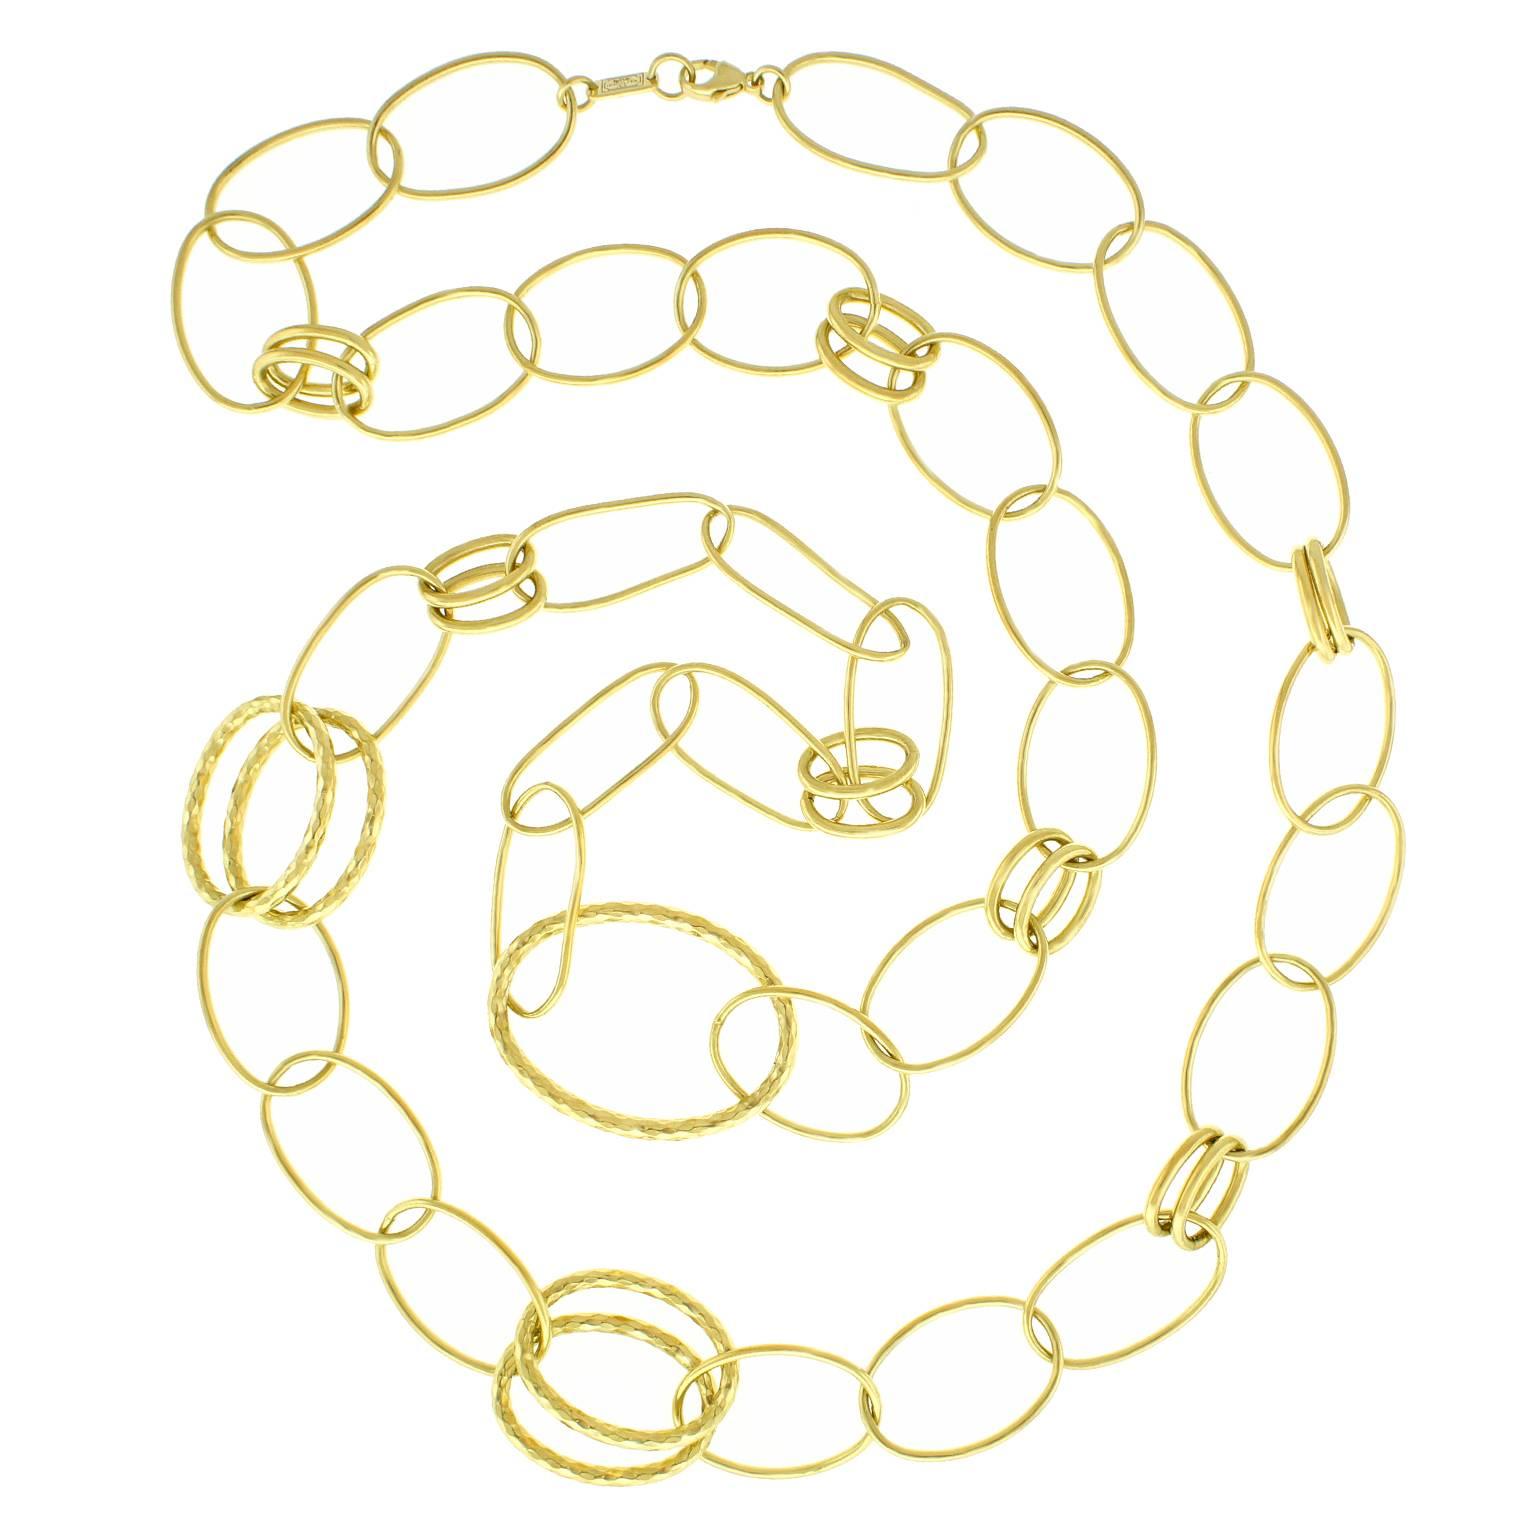 Ippolita "Glamazon" Long Gold Chain Necklace